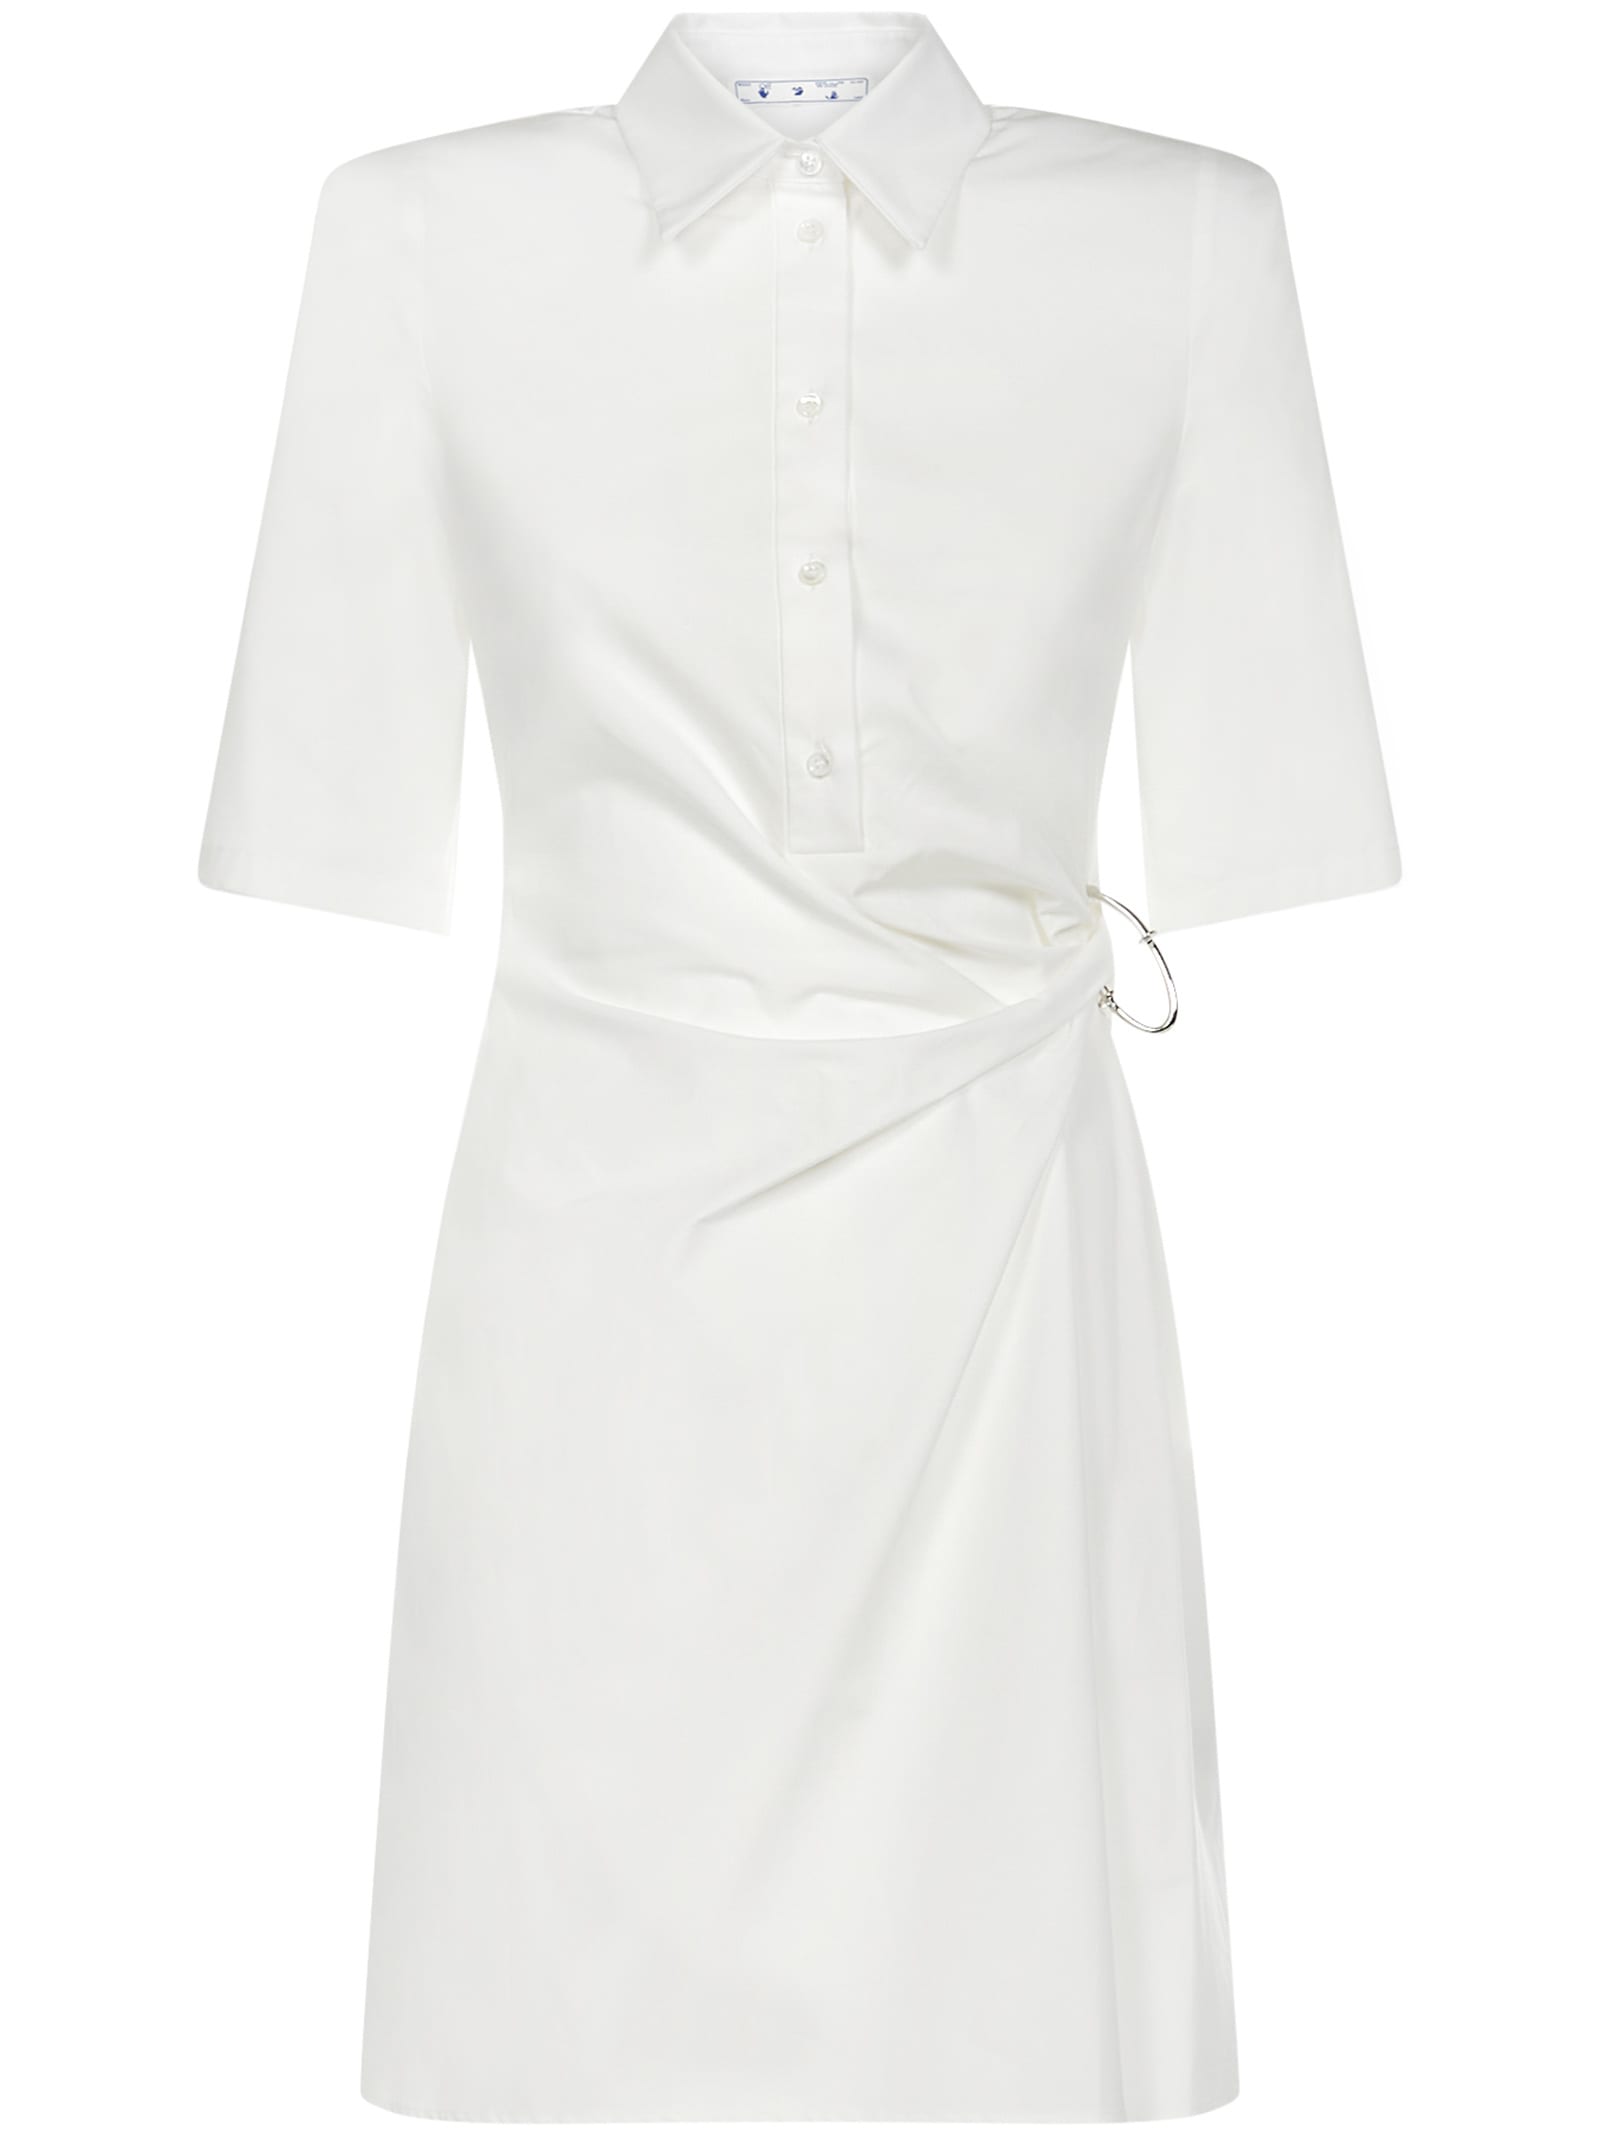 OFF-WHITE OFF-WHITE DRESS,OWDB328S21FAB002 0100